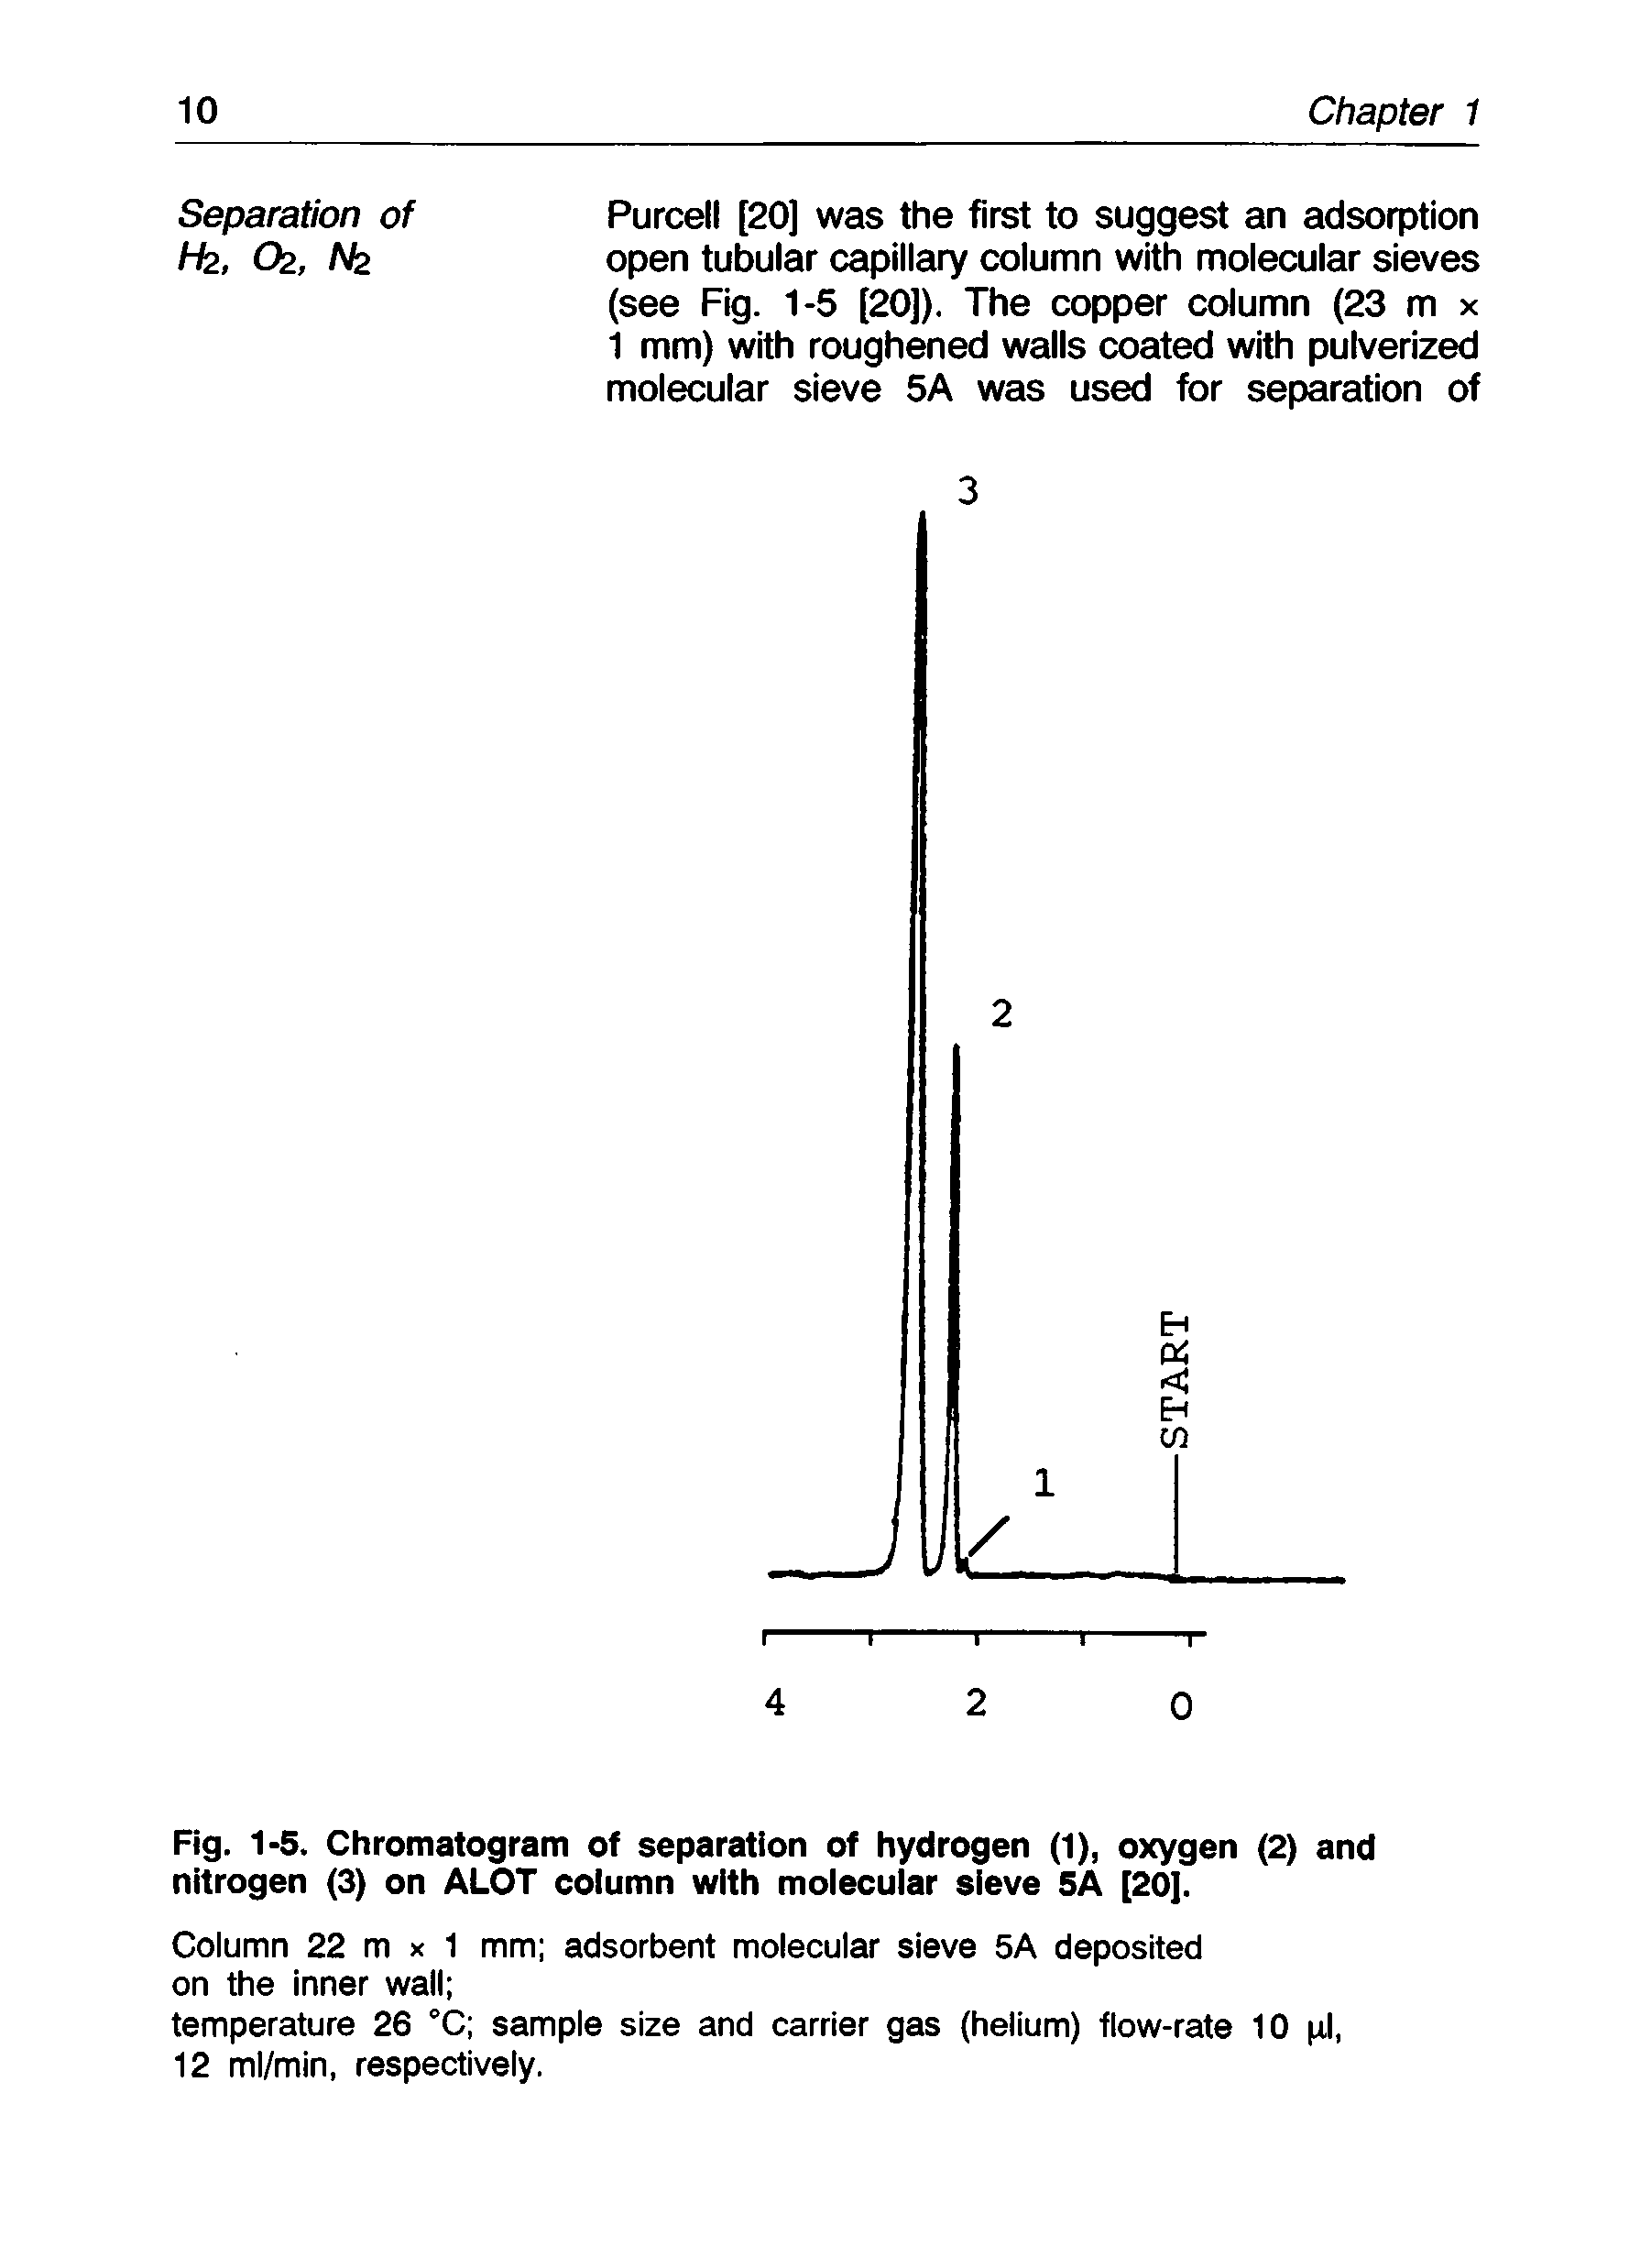 Fig. 1>5. Chromatogram of separation of hydrogen (1), oxygen (2) and nitrogen (3) on ALOT column with molecular sieve SA [20].